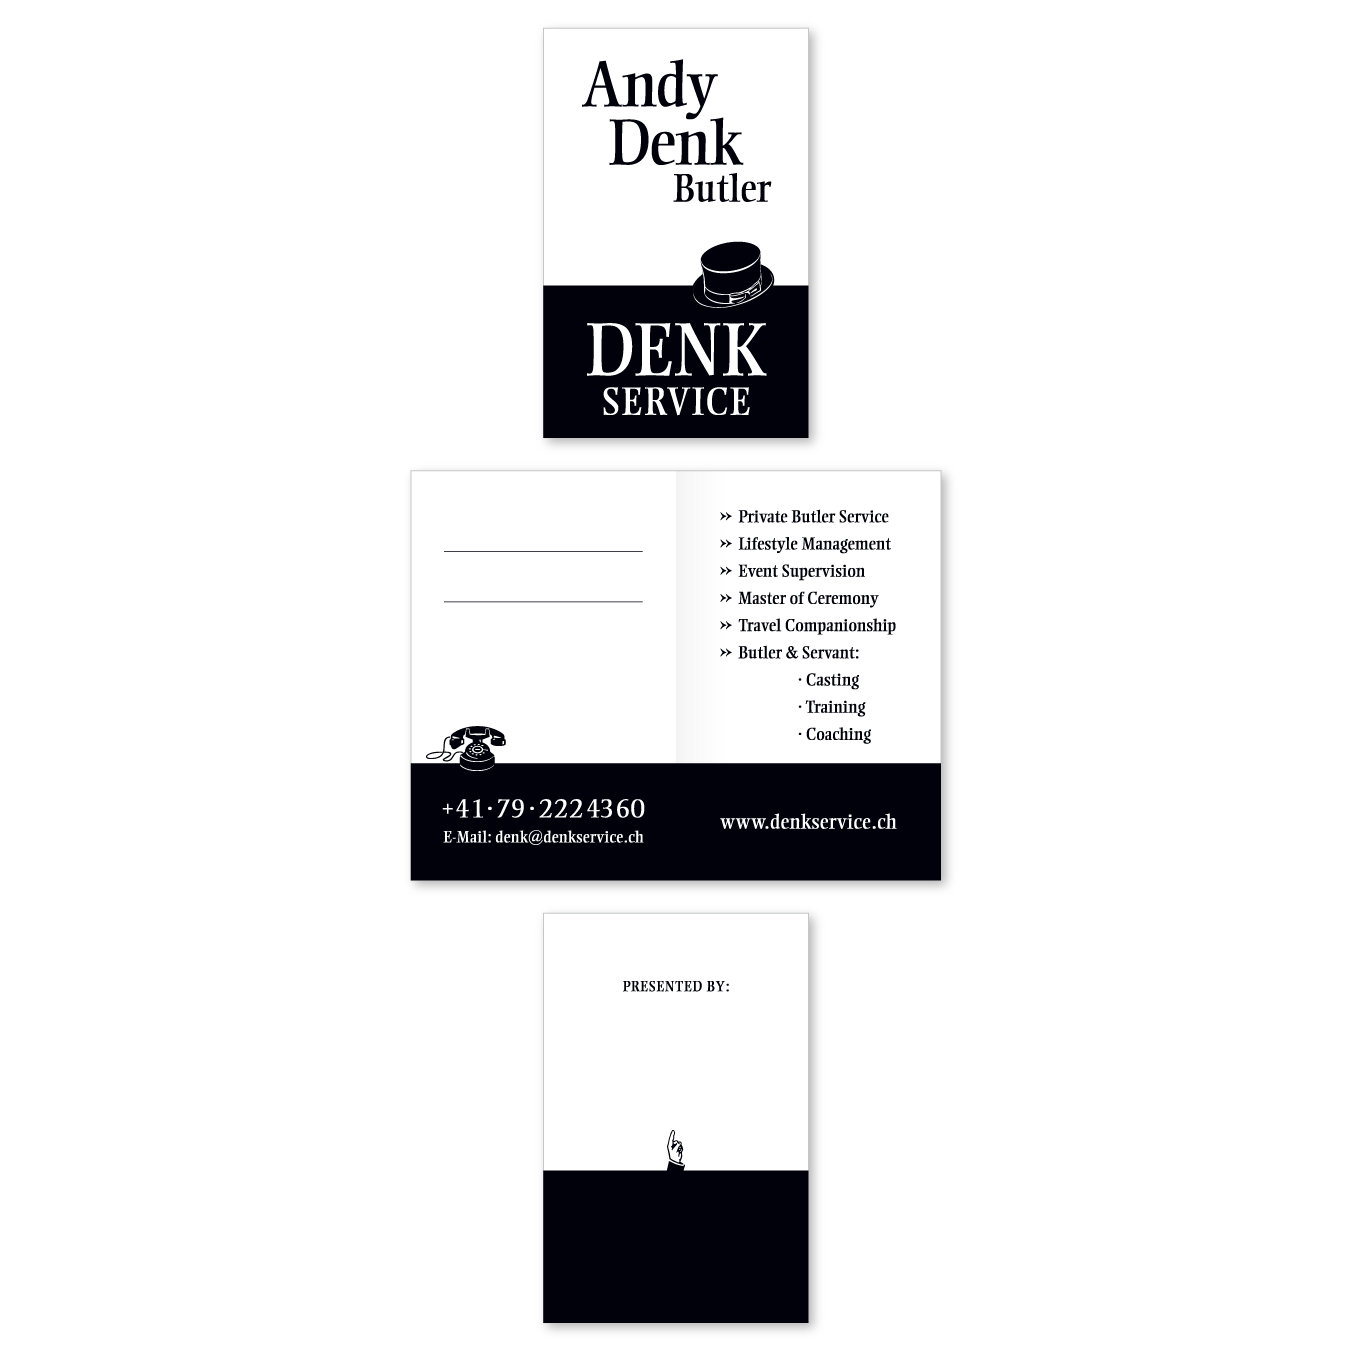 Denkservice · Andy Denk · Butler | www.denkservice.ch